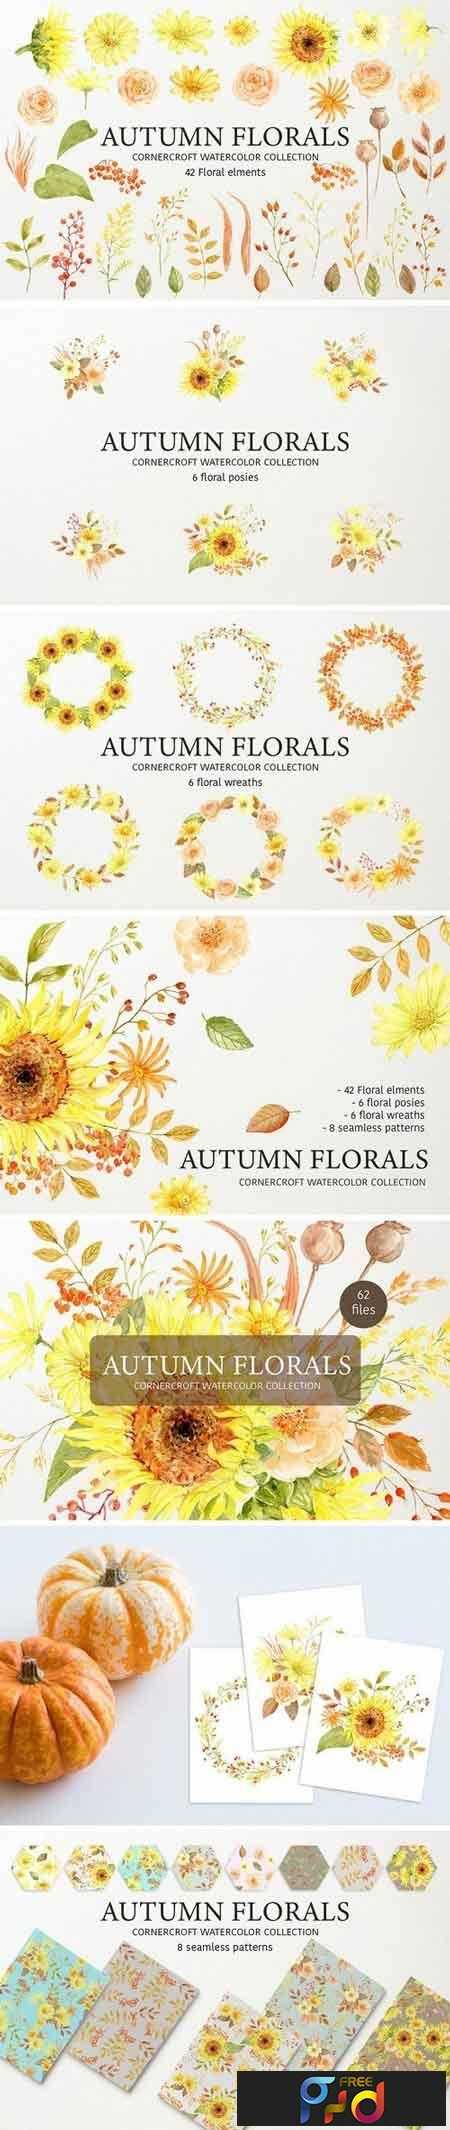 FreePsdVn.com 1810103 STOCK autumn floral collection 2840864